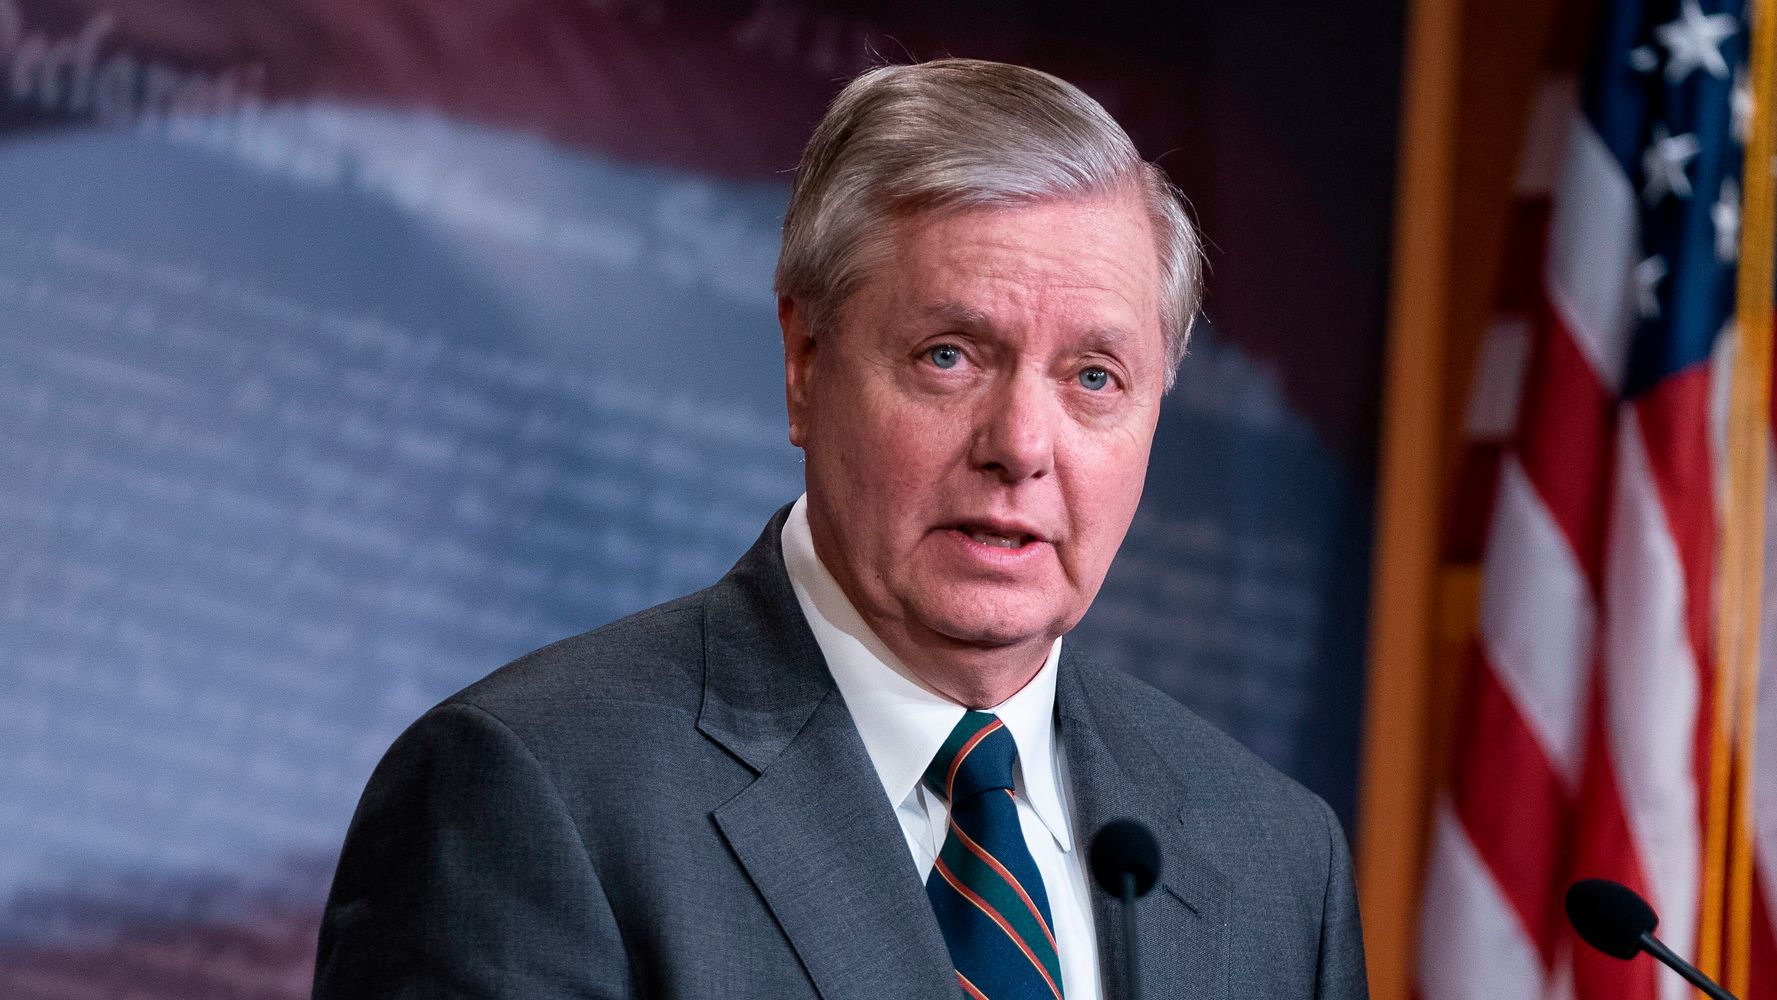 Senate Democrats Urge Lindsey Graham To Focus Hearings On COVID-19, Not Mor...